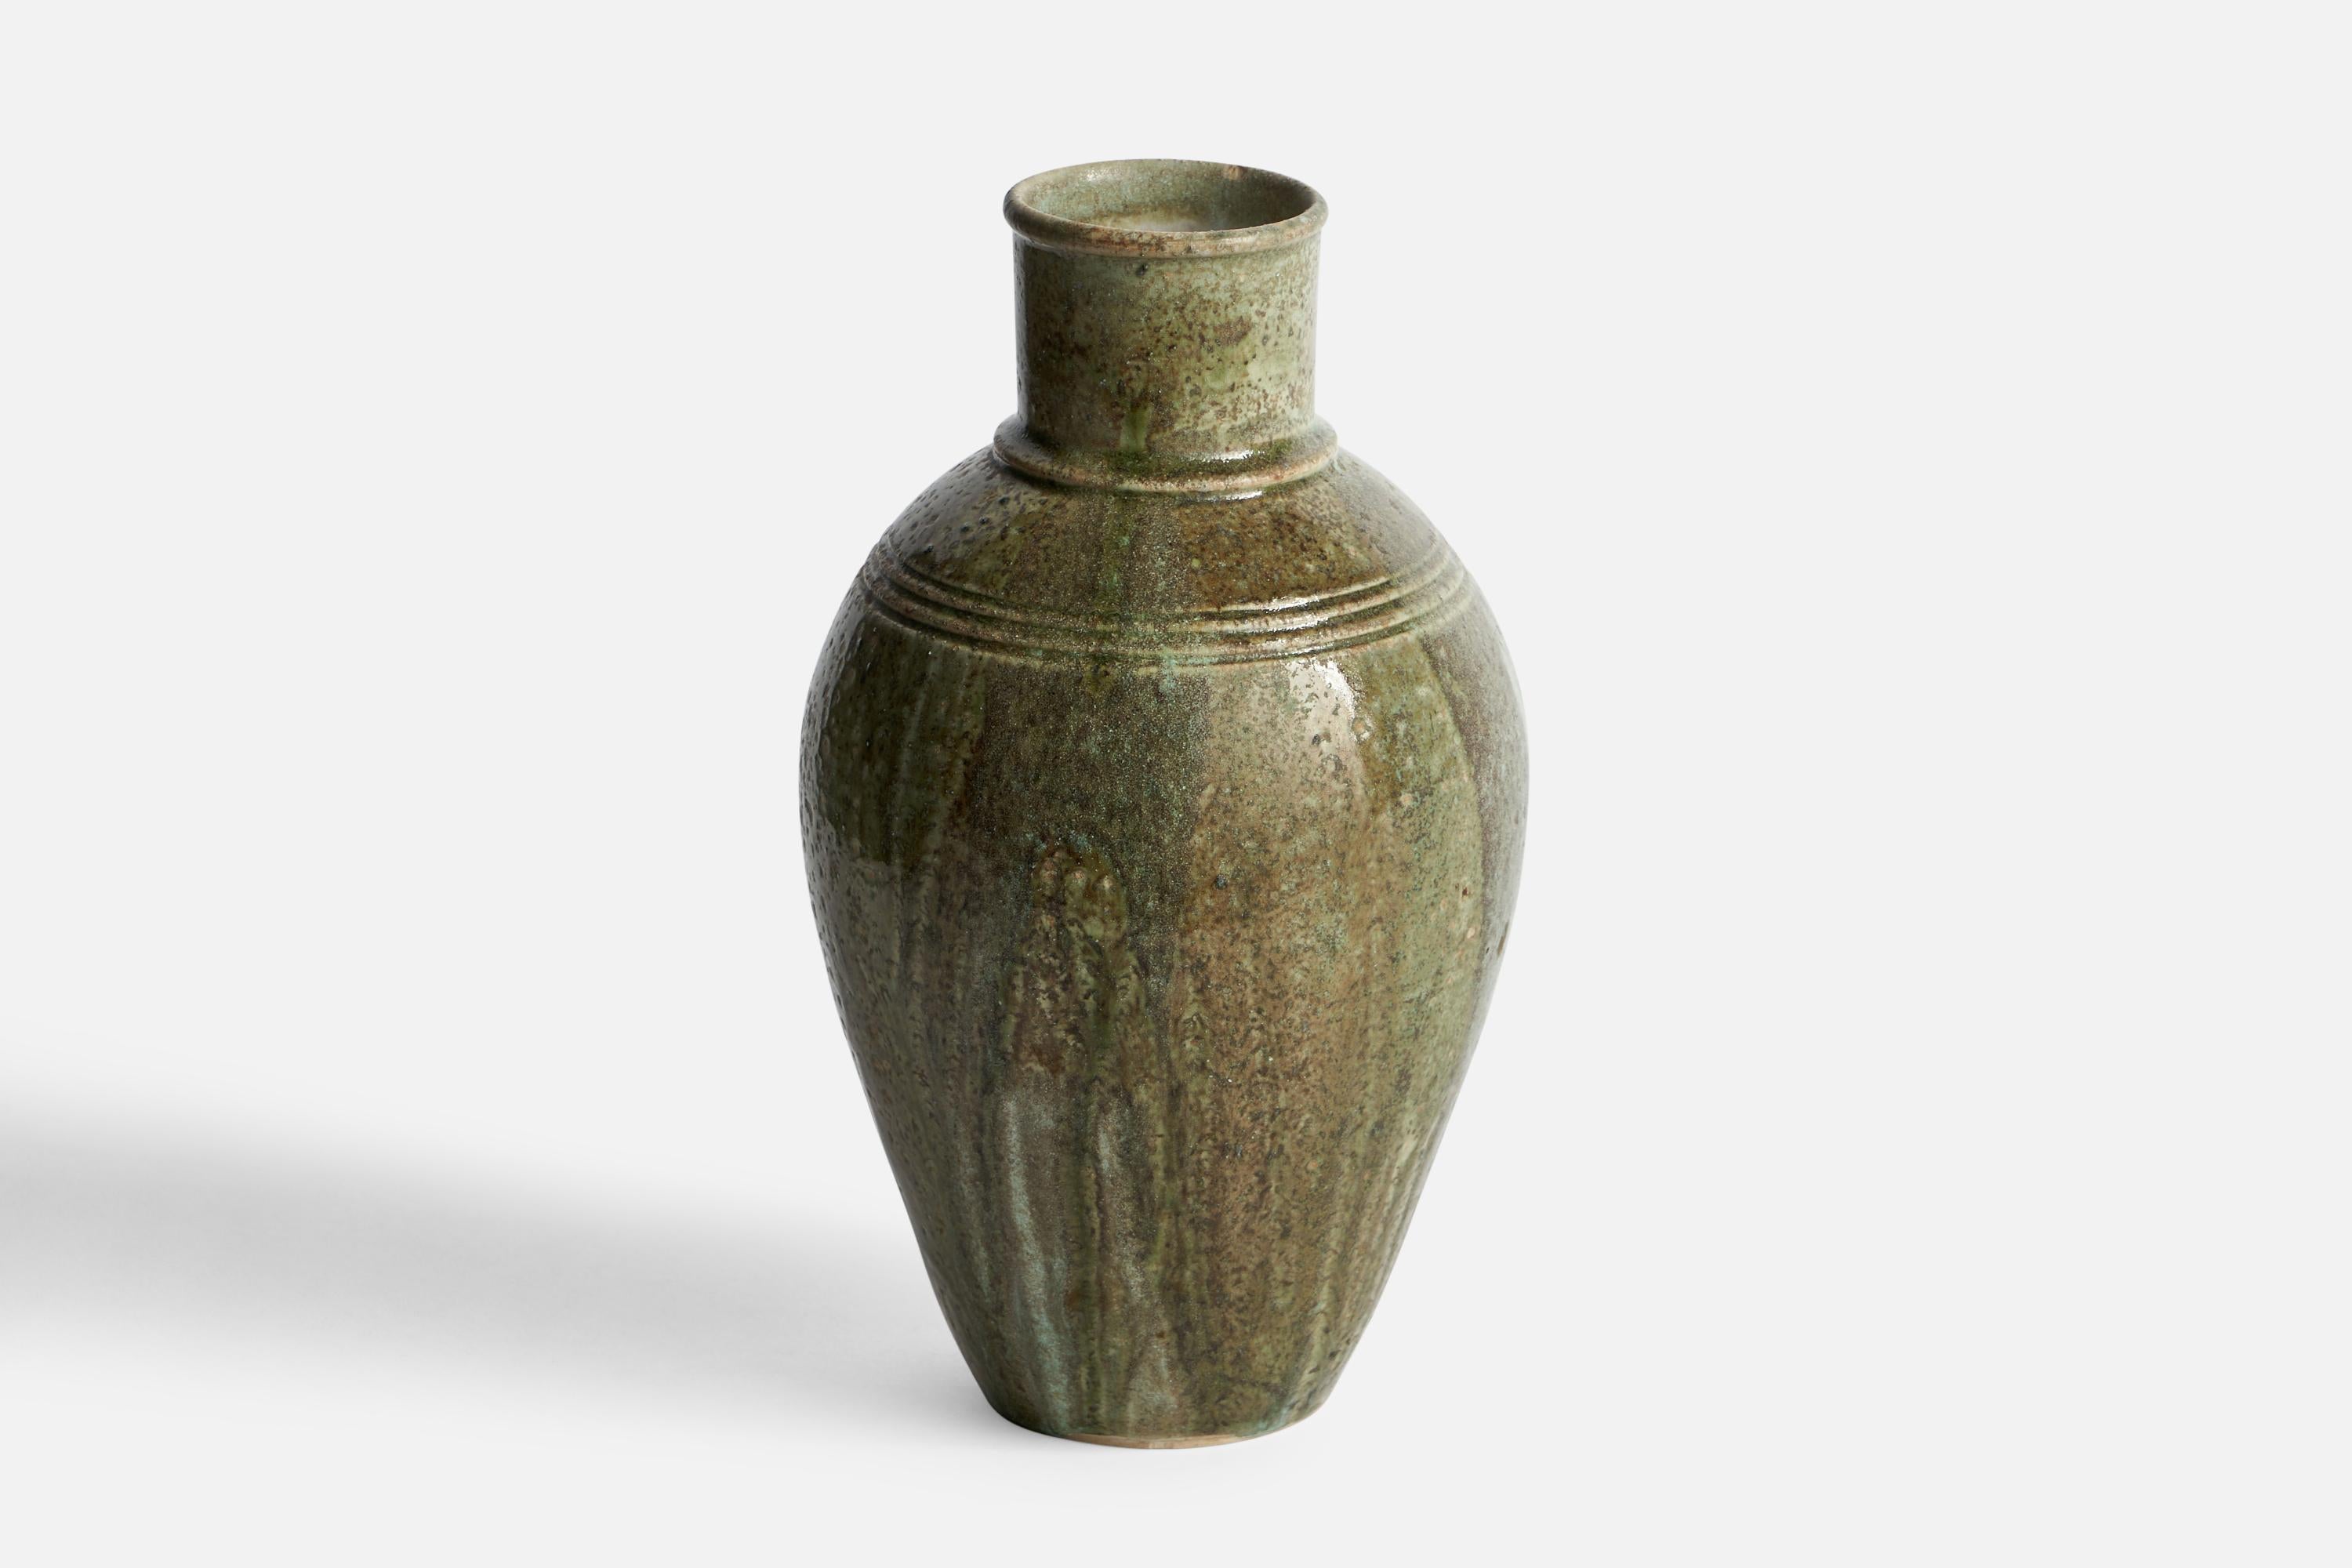 A green-glazed ceramic vase designed and produced in Sweden, c. 1940s.